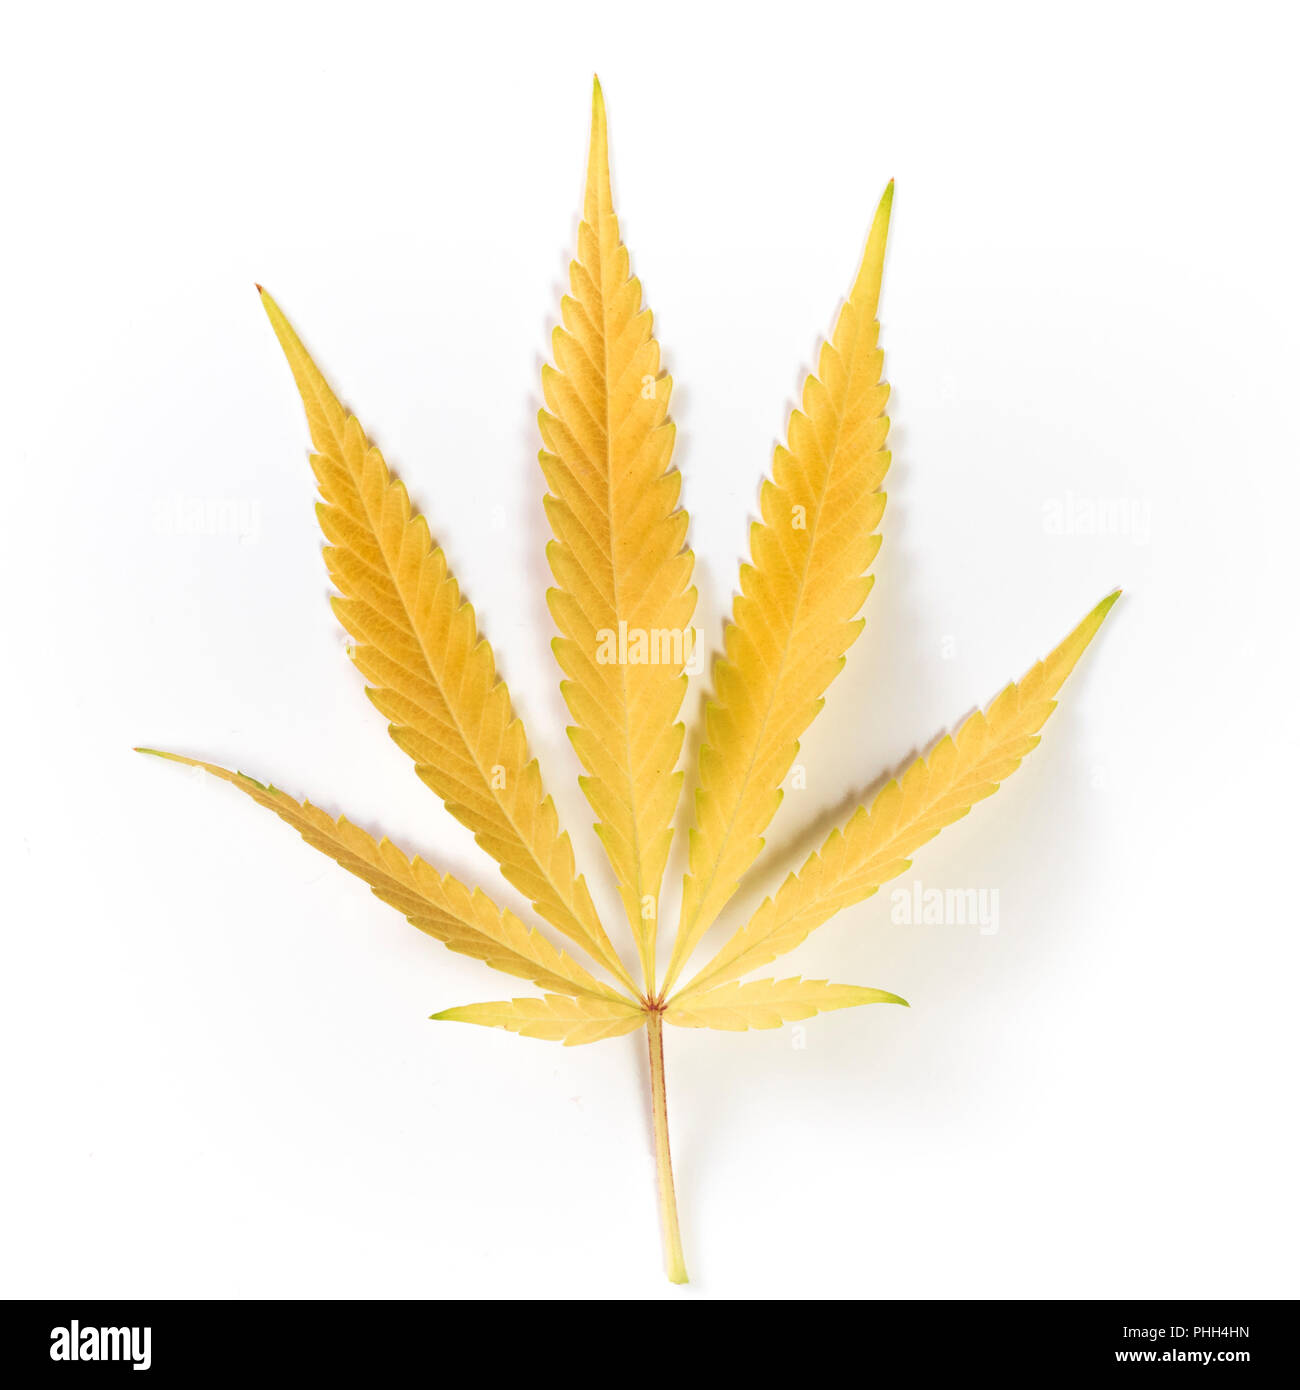 Unico orange marijuana leaft isolati su sfondo bianco Foto Stock